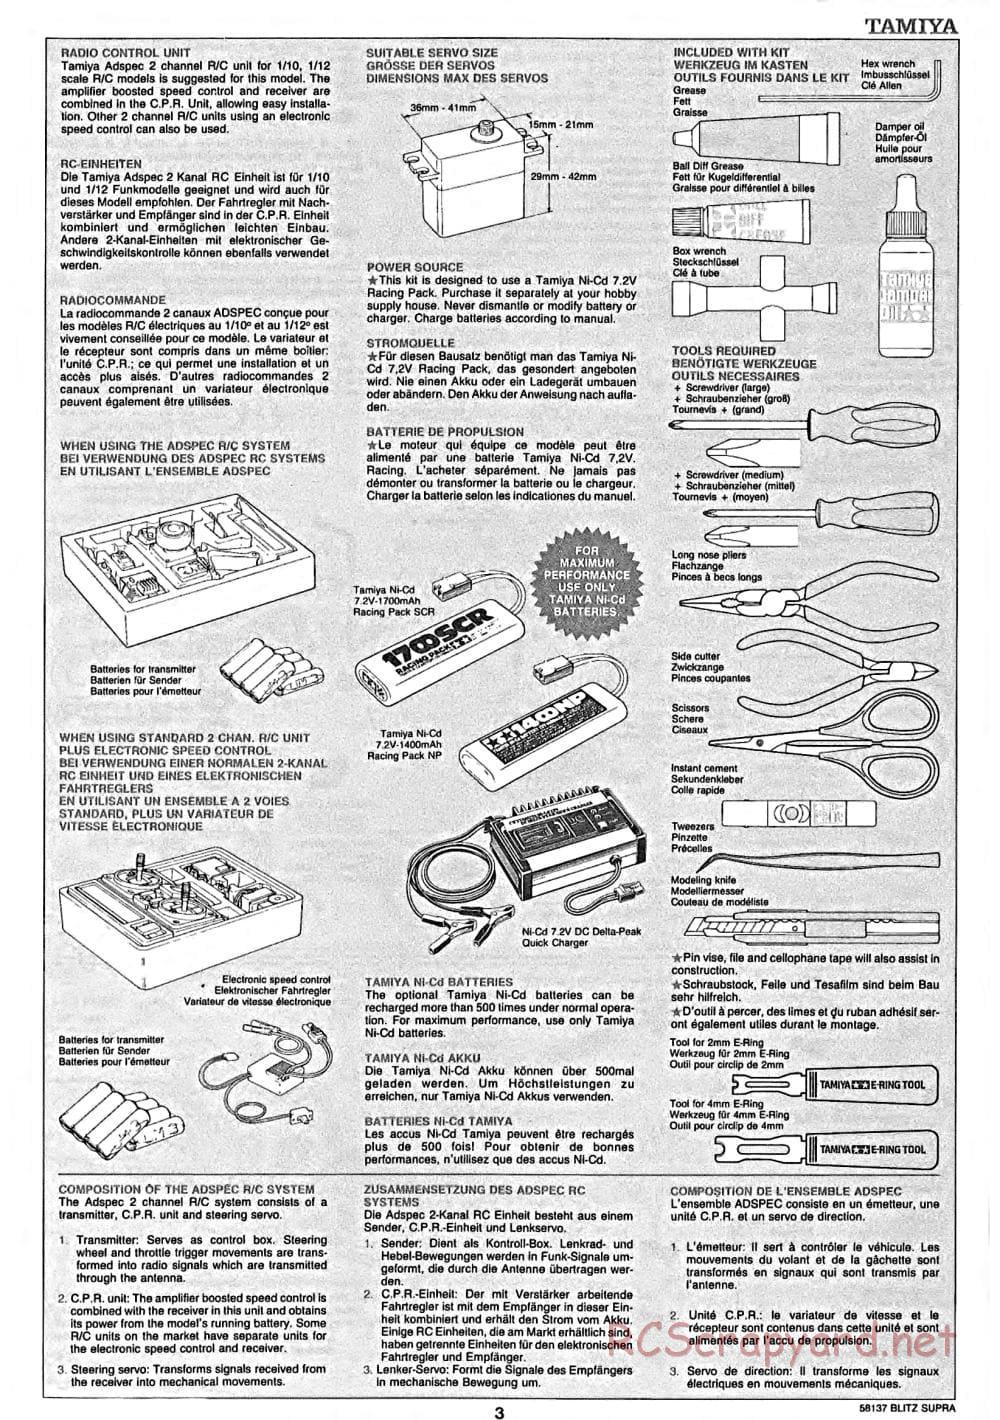 Tamiya - Blitz Toyota Supra Gr.N - TA-02 Chassis - Manual - Page 3